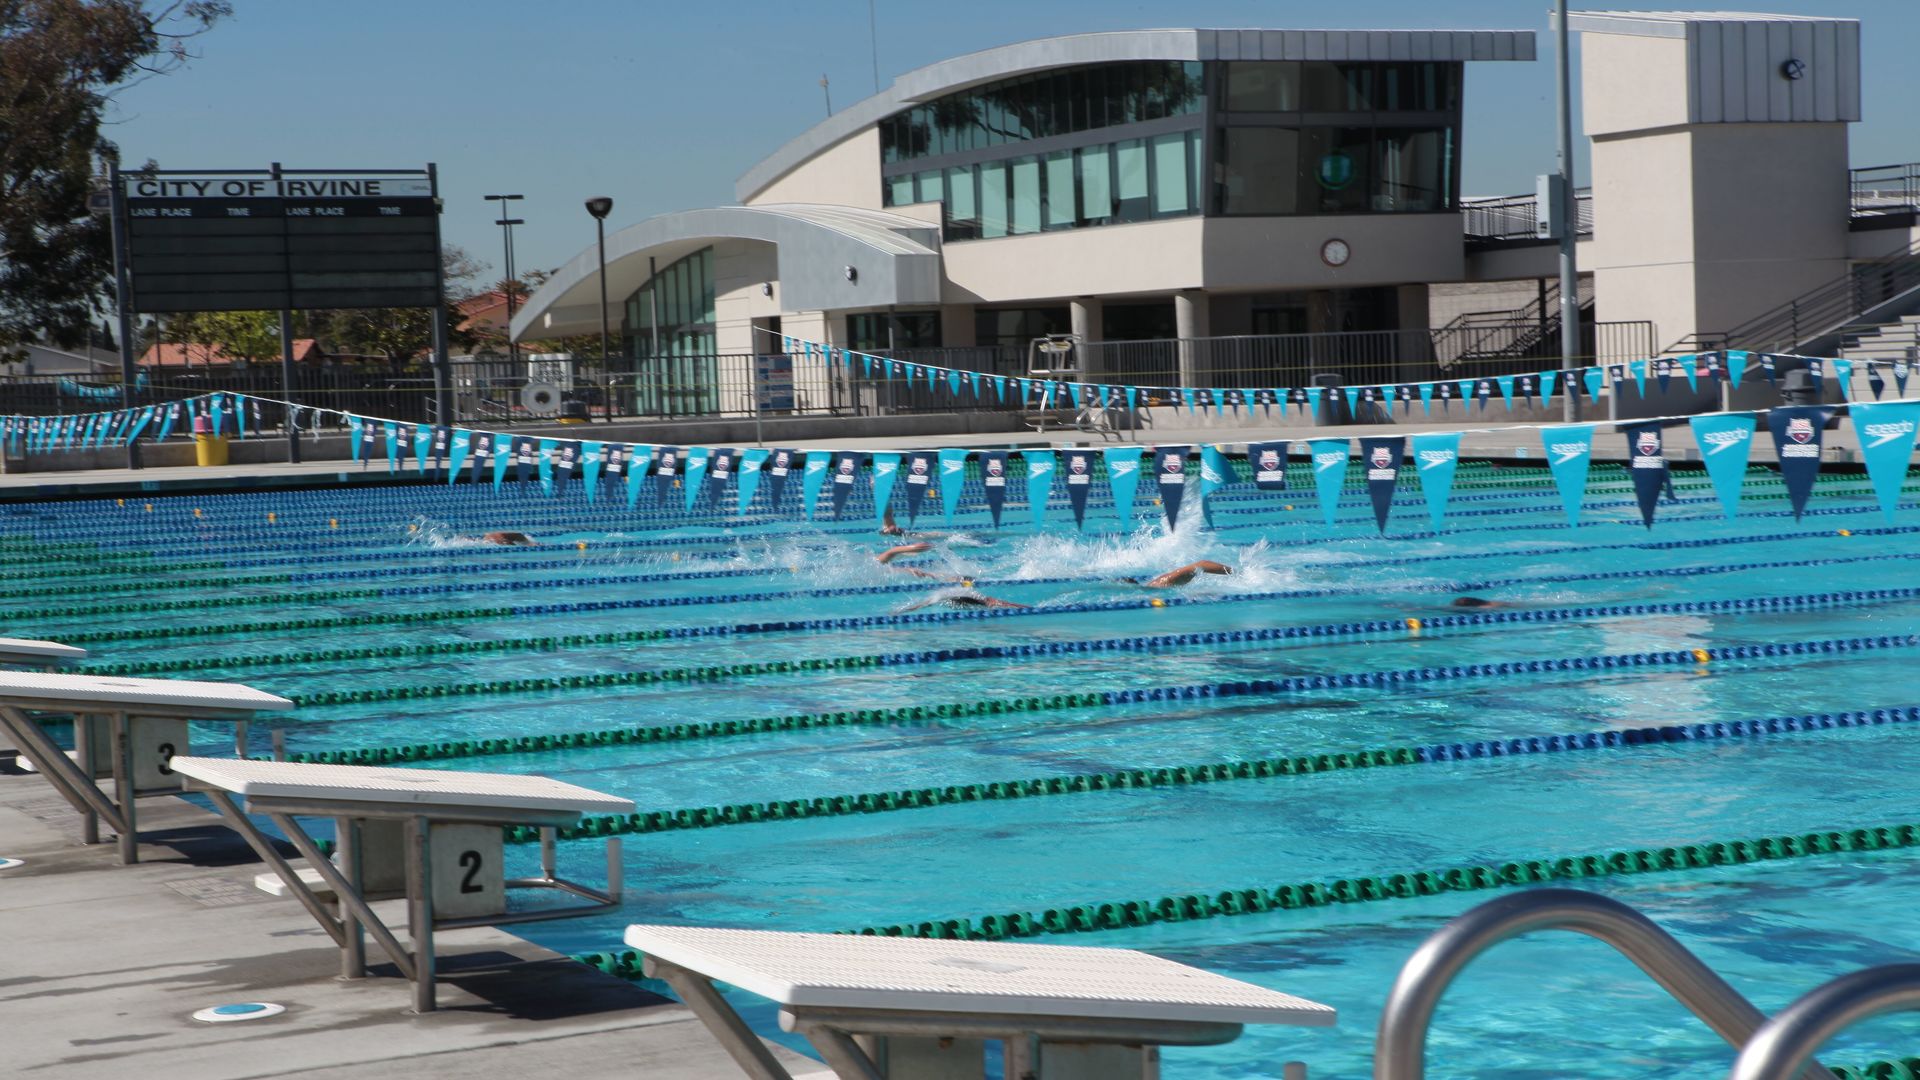 2019 Sports Facilities Guide: Irvine, California||